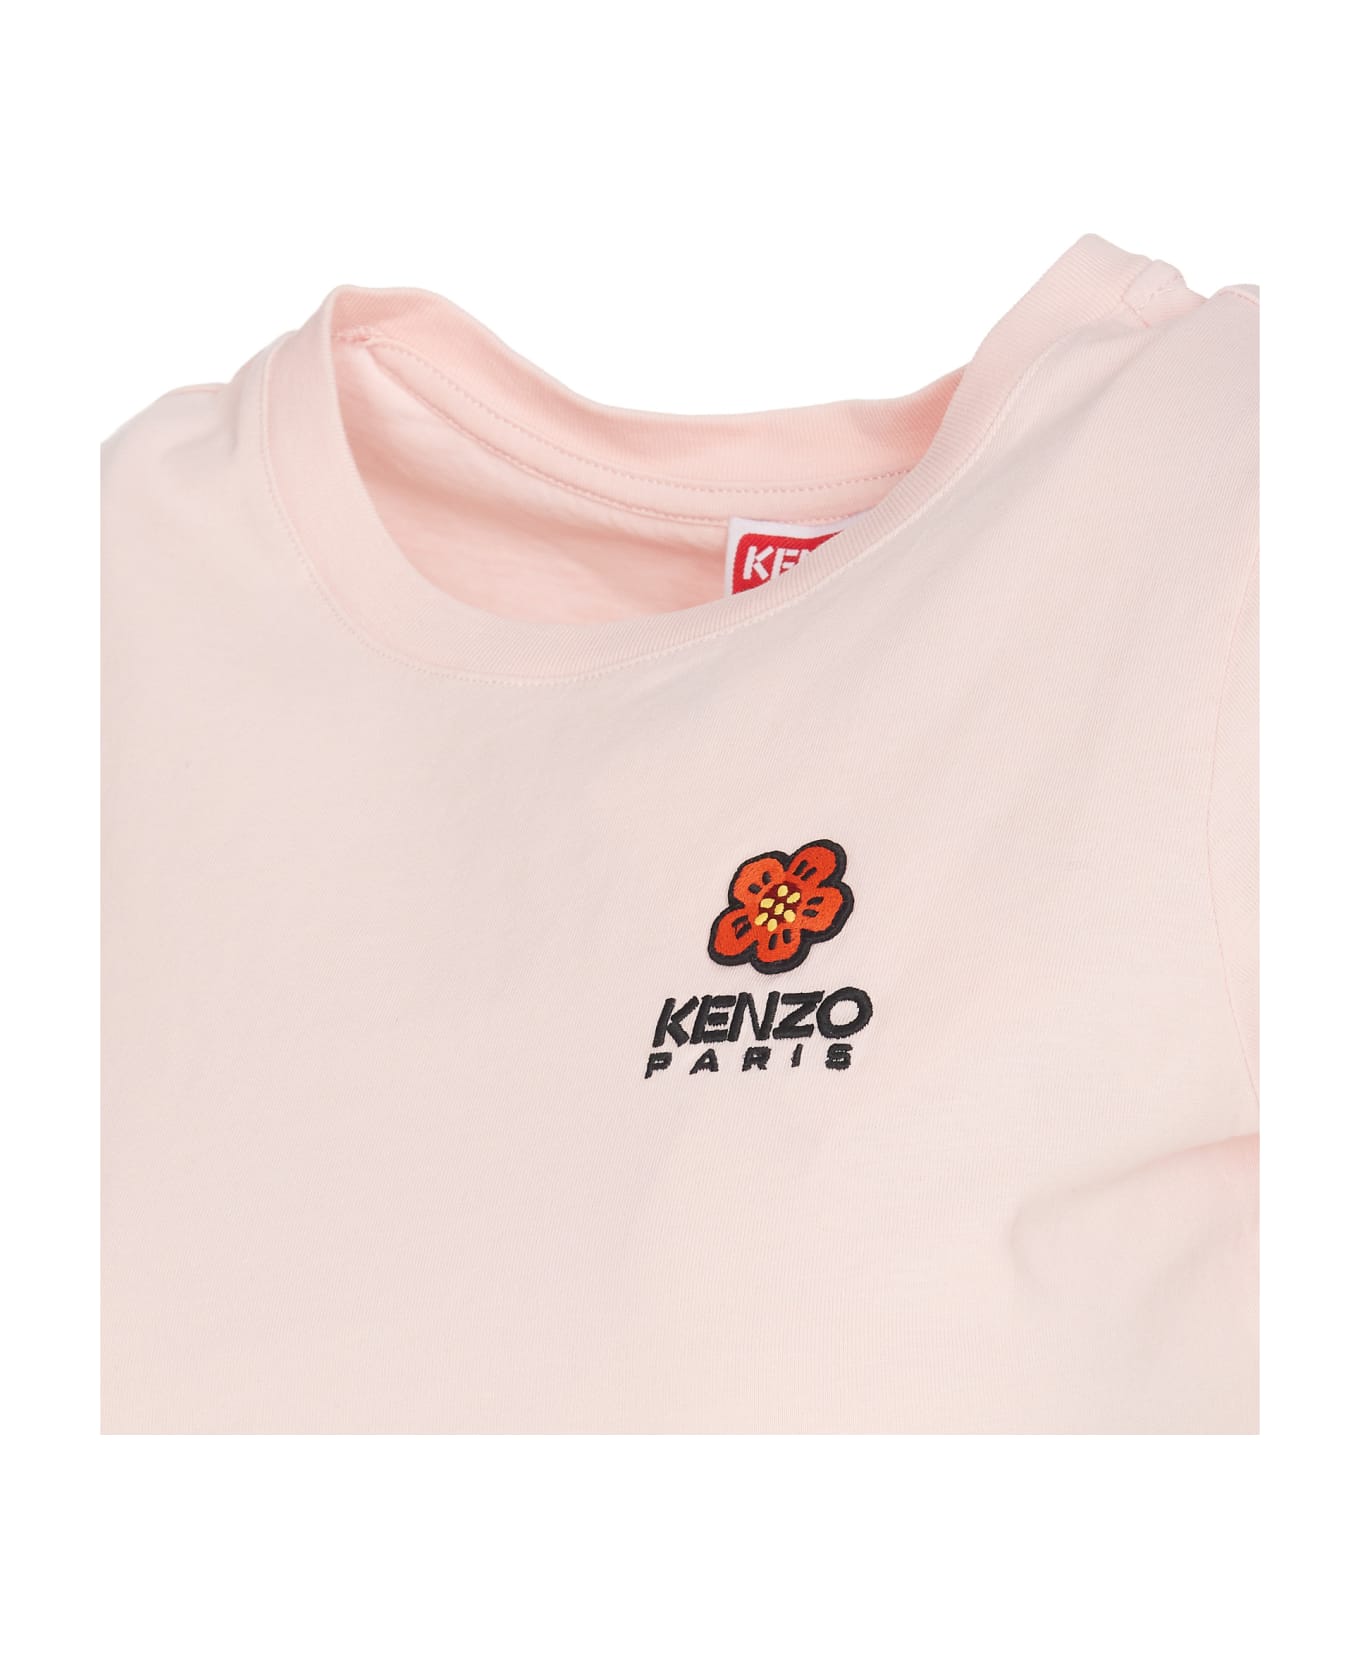 Kenzo Boke Crest Baby T-shirt - Pink